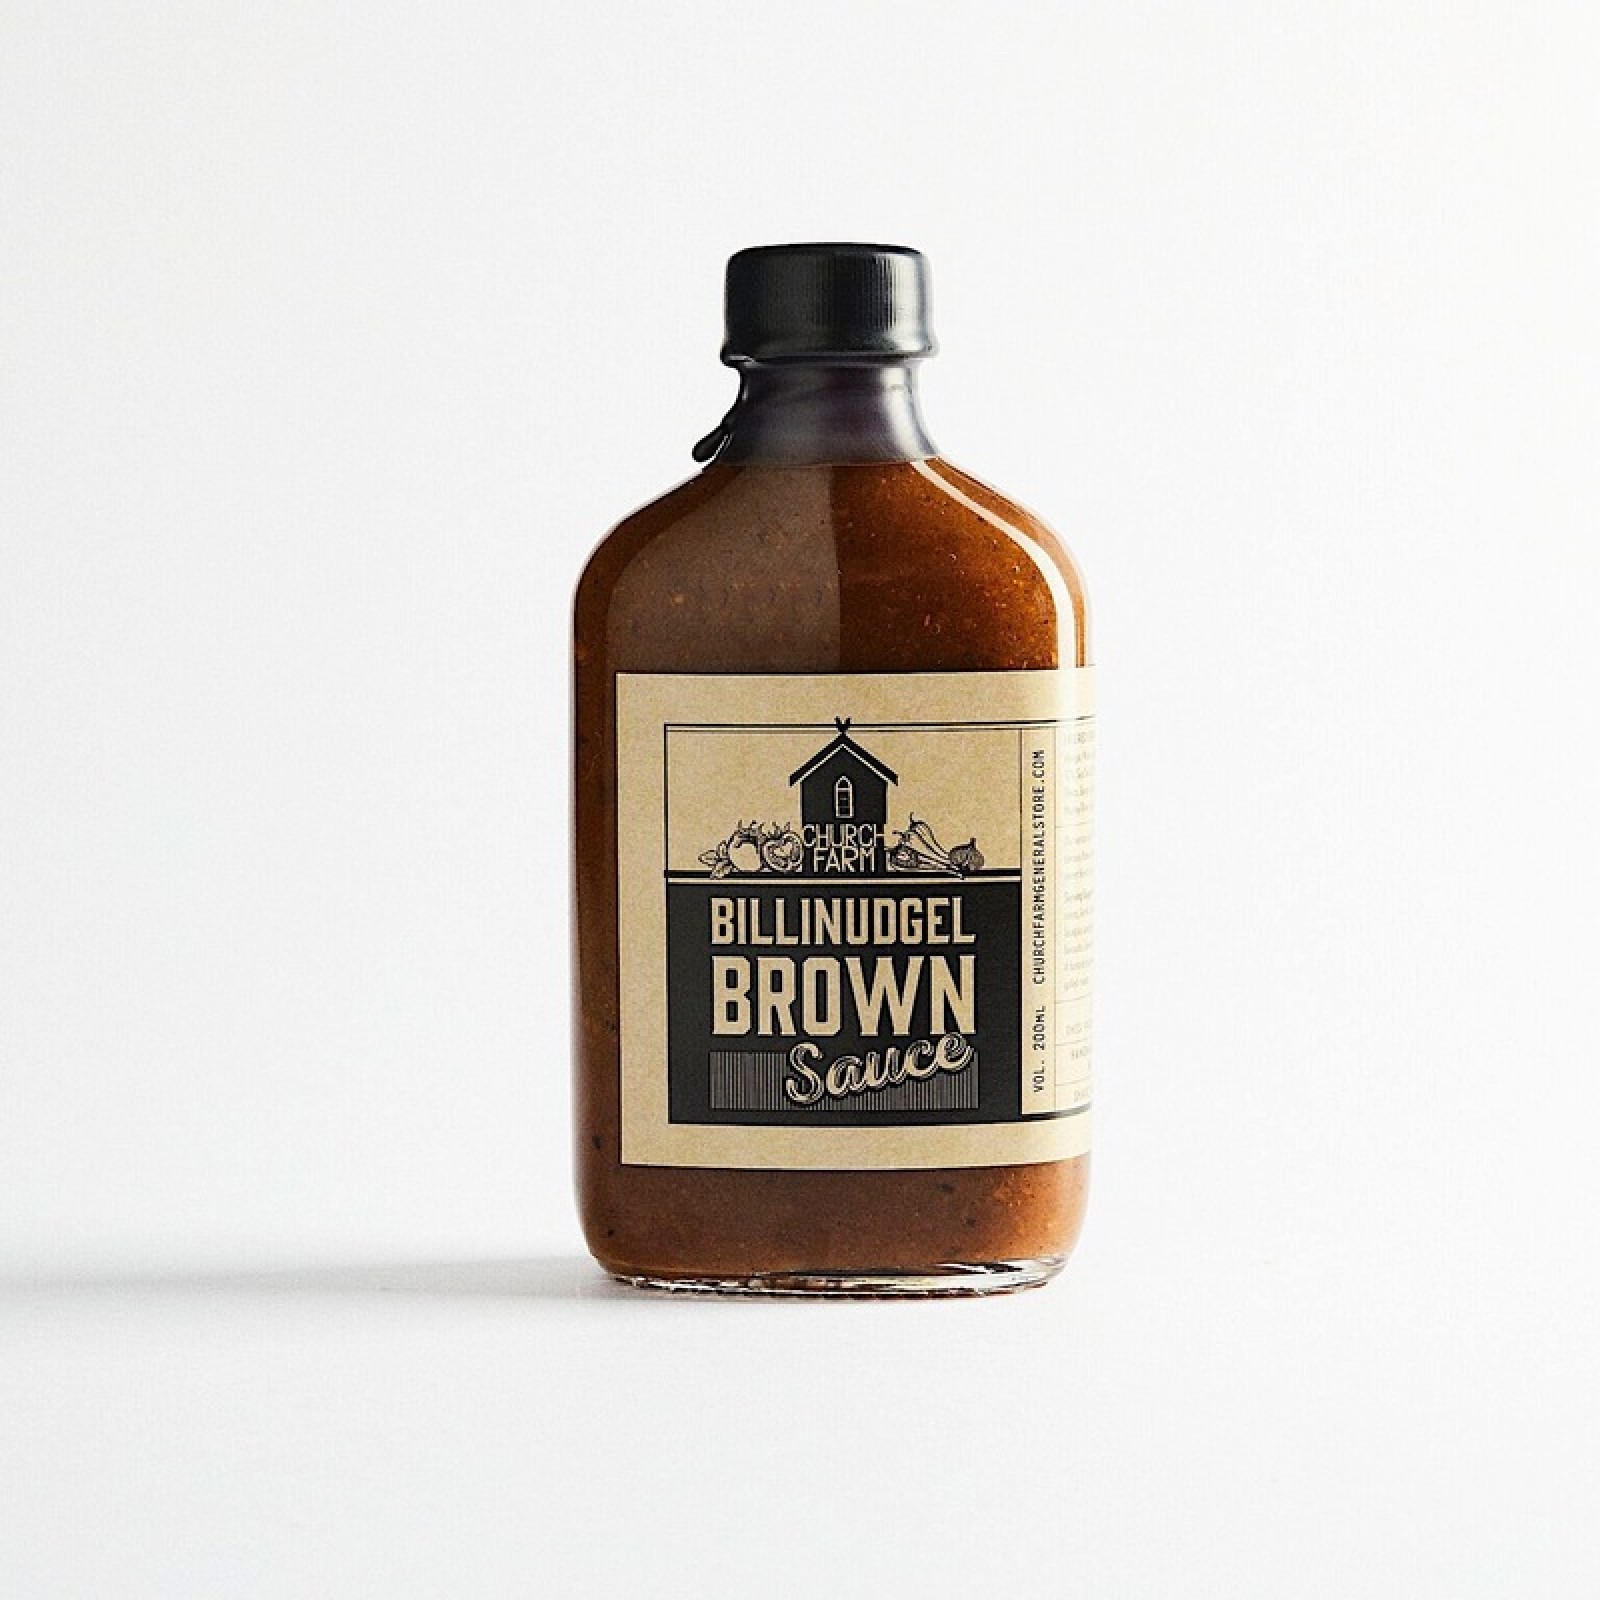 Billinudgel Brown Sauce